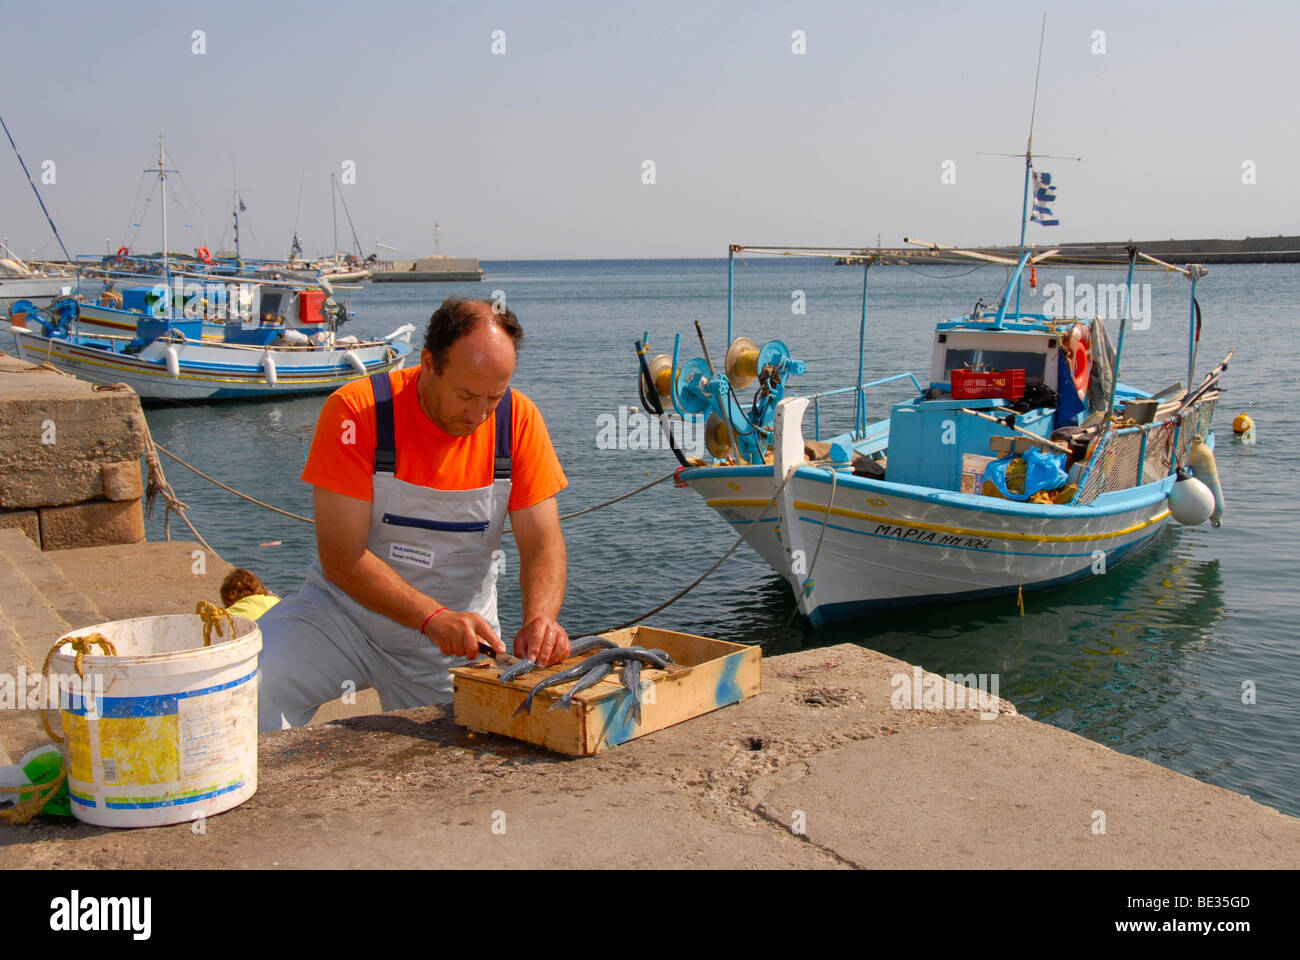 Fisherman gutting fish, harbour with fishing boats, Plomari, Lesbos, Aegean Sea, Greece, Europe Stock Photo